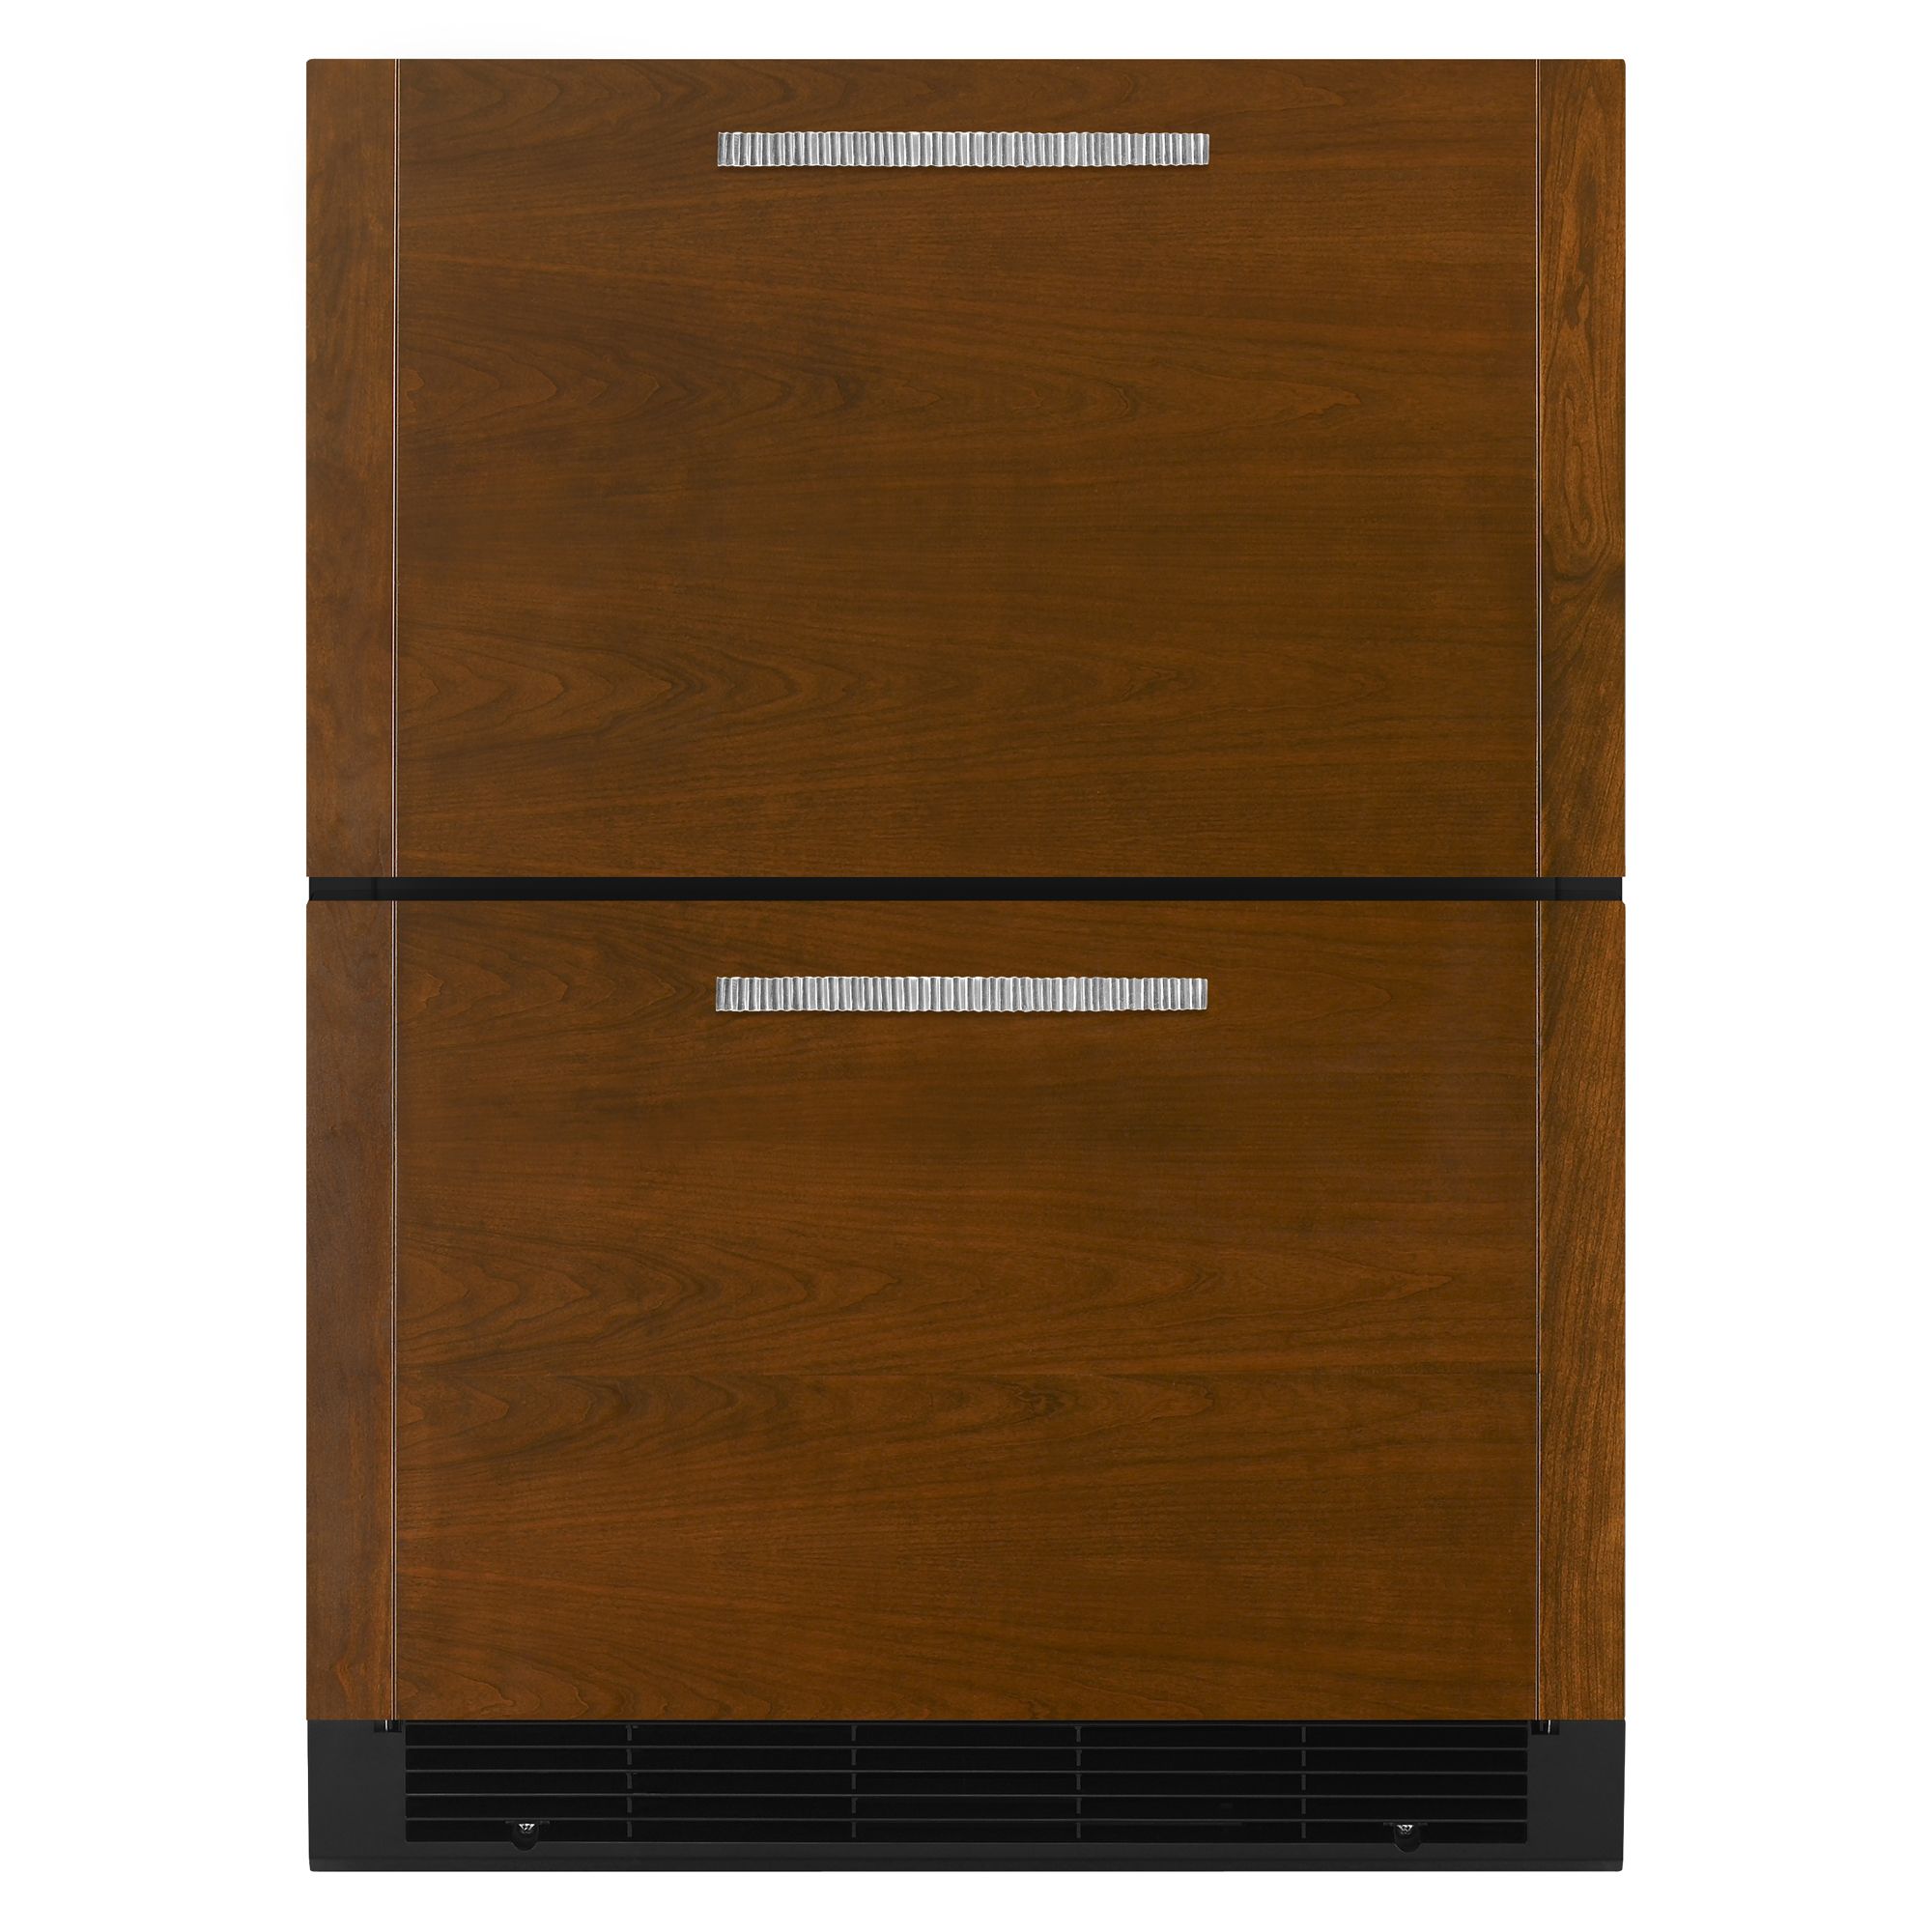 Double Drawer Refrigerator logo